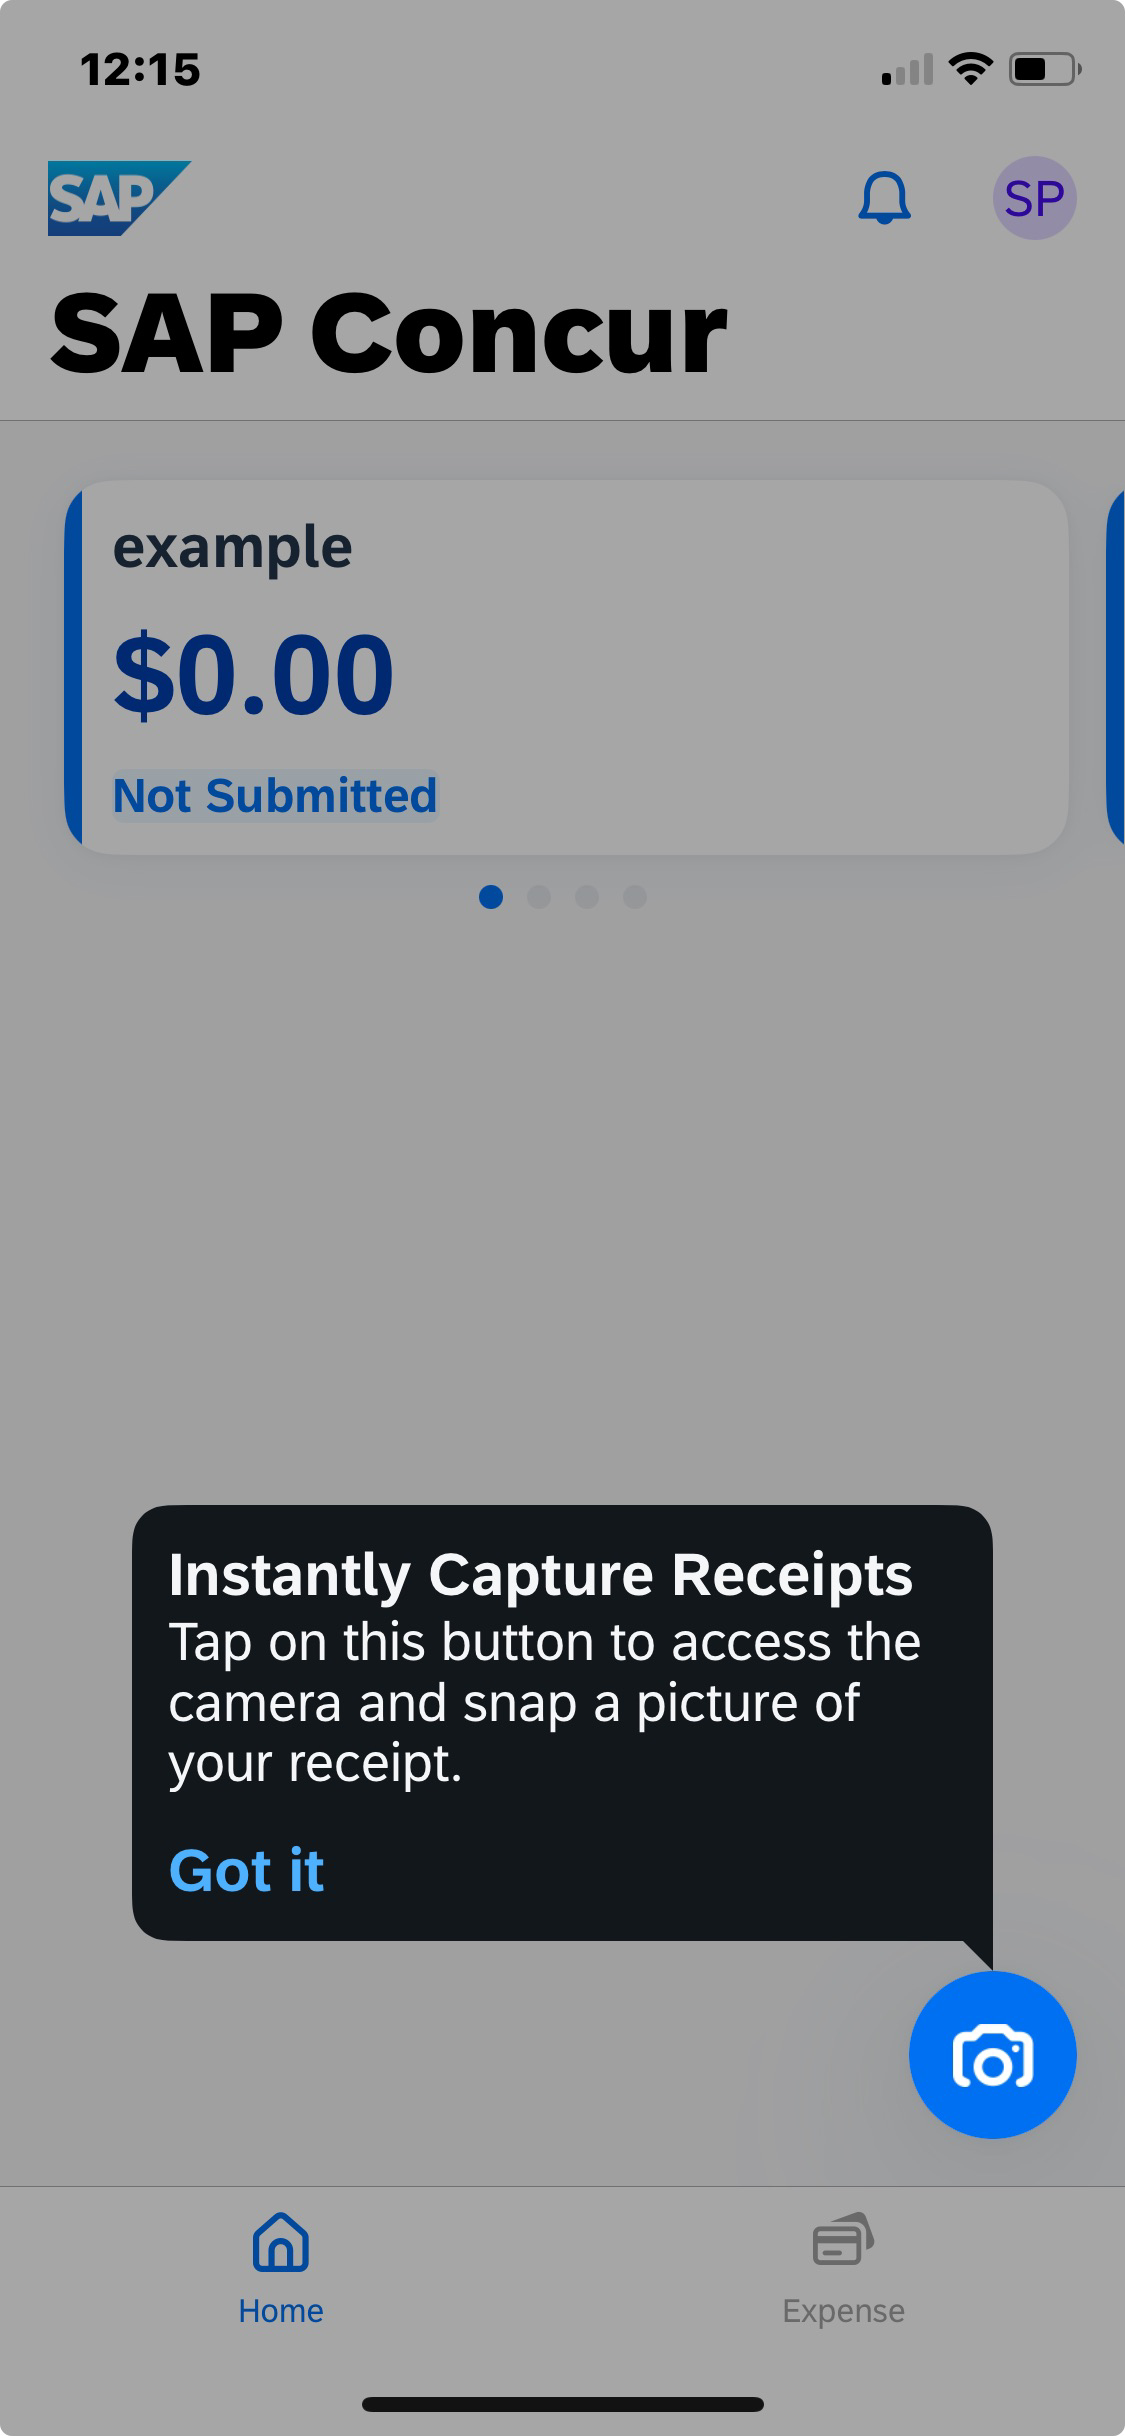 Concur app home page with capture receipts button pop up